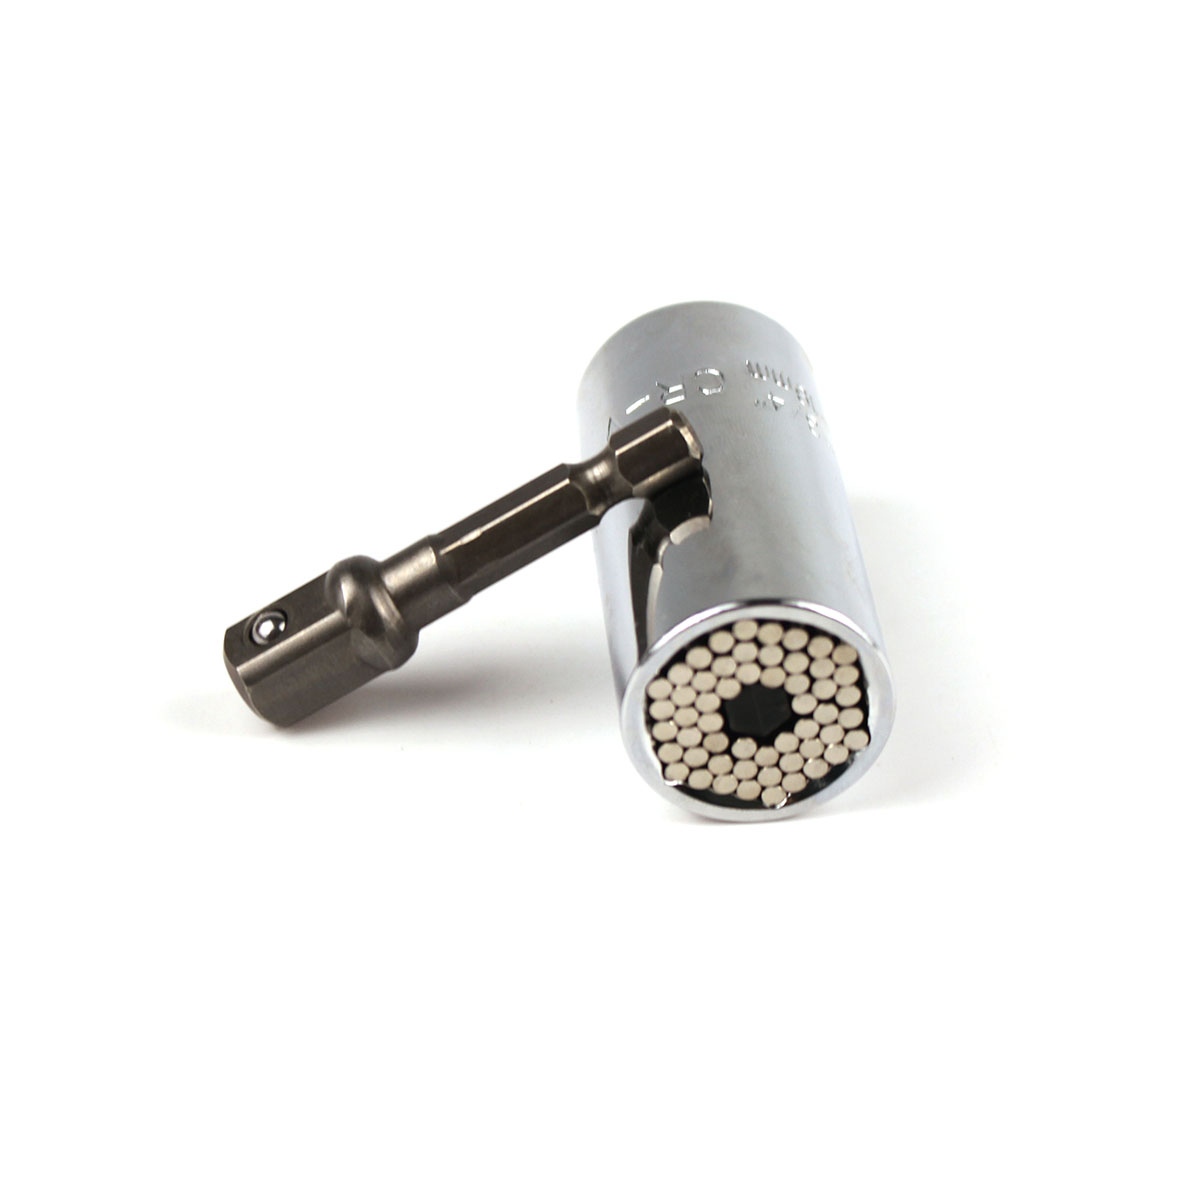 7mm-19 mm Universal Torque Wrench Set Socket Sleeve Power Drill Ratchet Bushing Spanner Key Magic Multi Hand Tools Cr-V Material